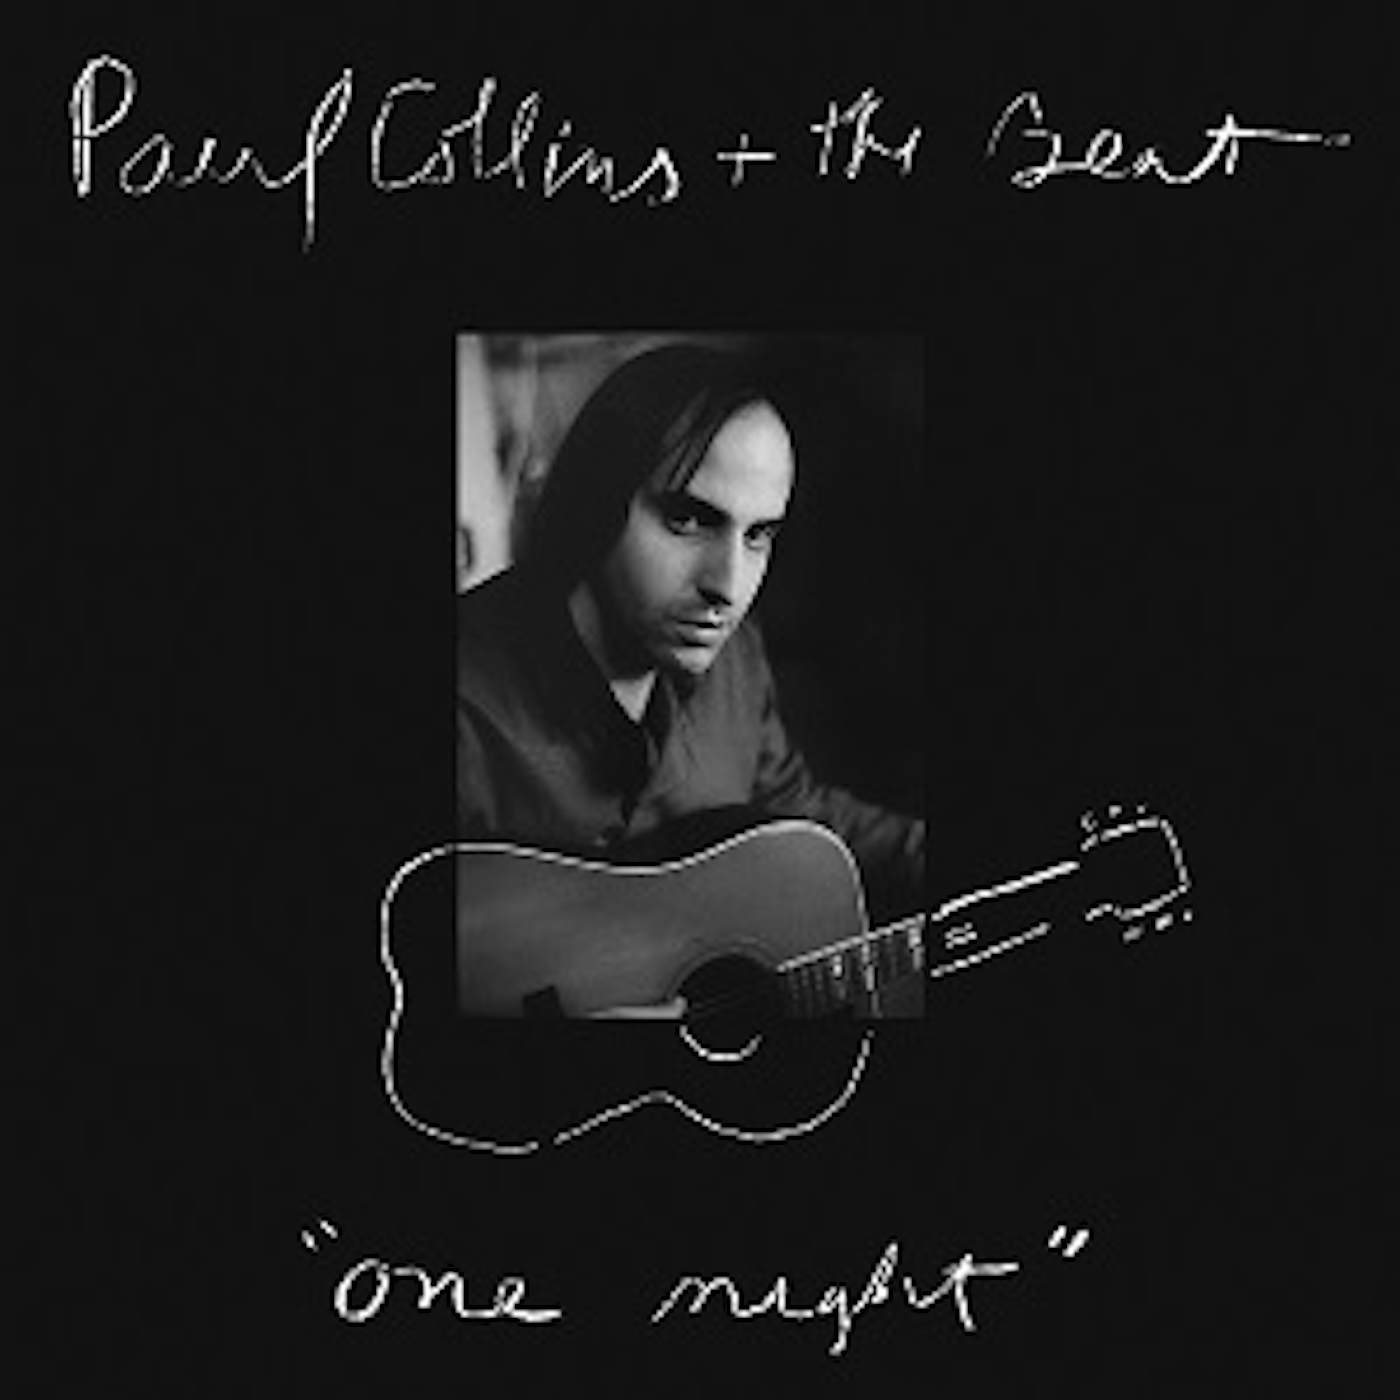 Paul Collins Beat One Night Vinyl Record